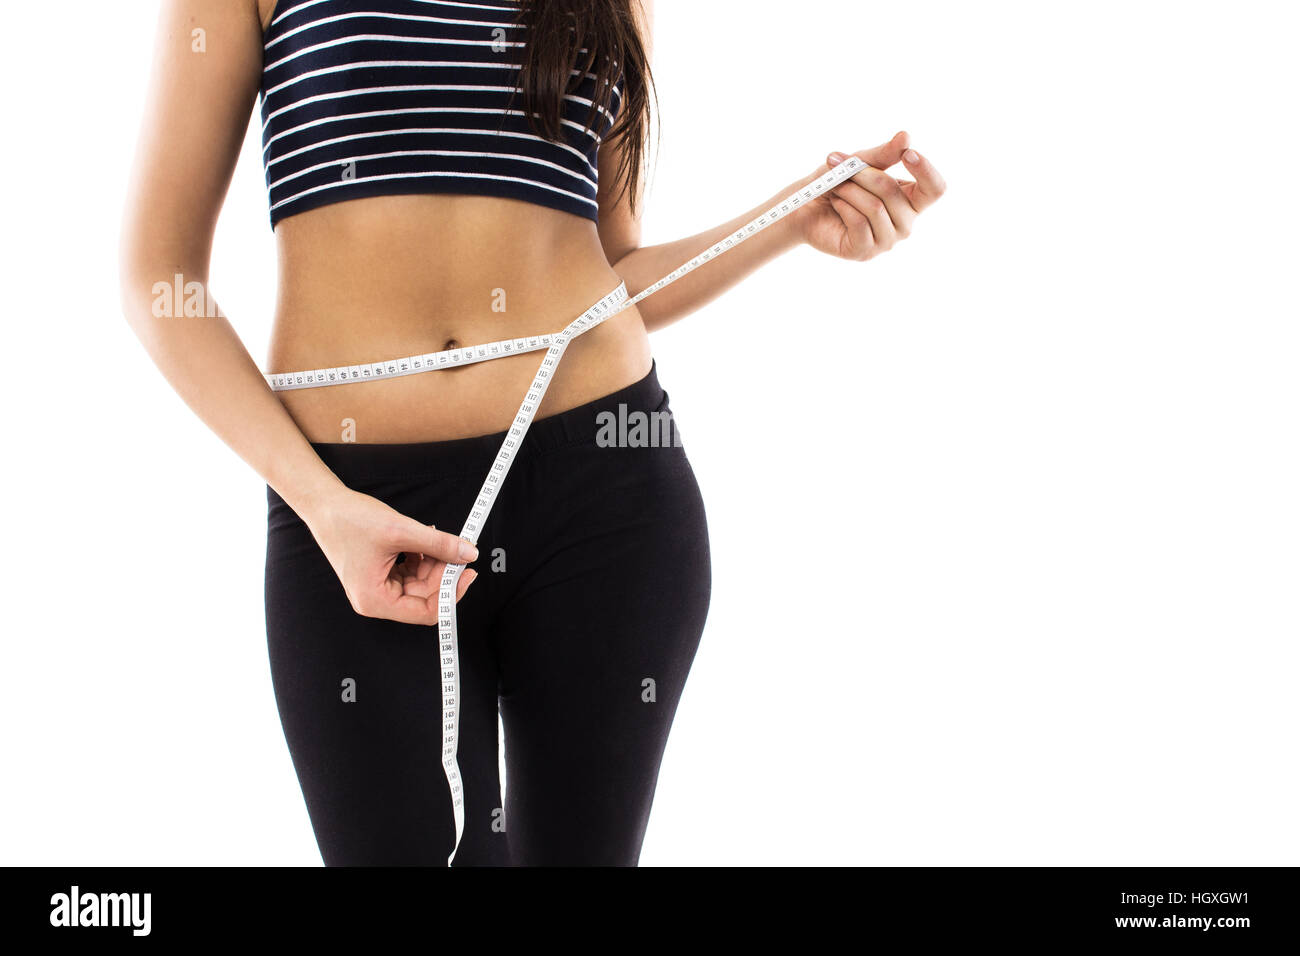 https://c8.alamy.com/comp/HGXGW1/slim-girl-measuring-her-waist-with-centimeter-measuring-tape-isolated-HGXGW1.jpg